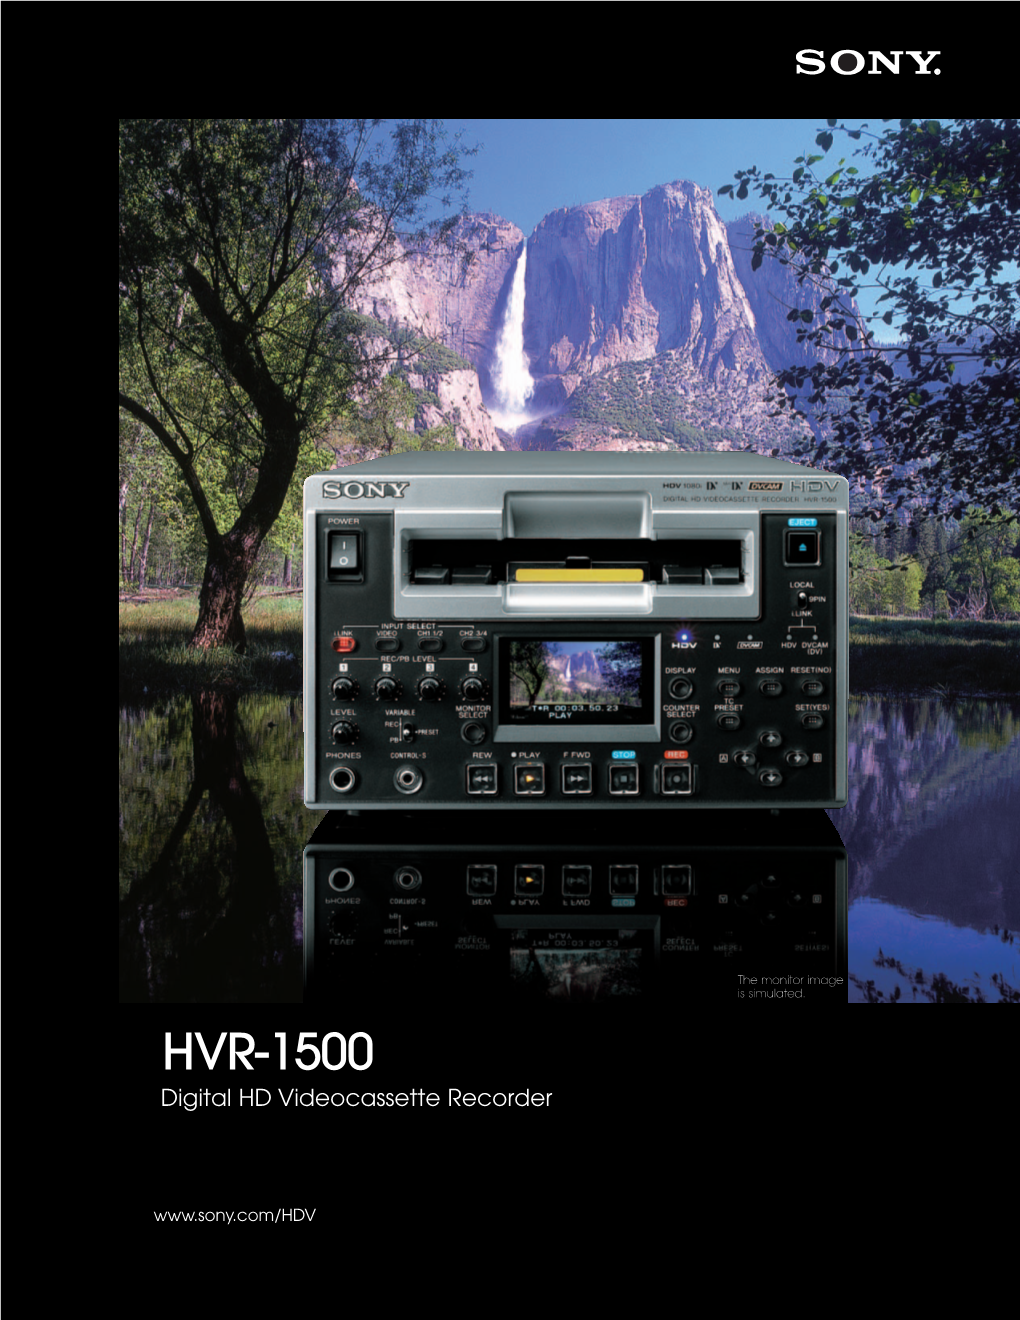 HVR-1500 Digital HD Videocassette Recorder